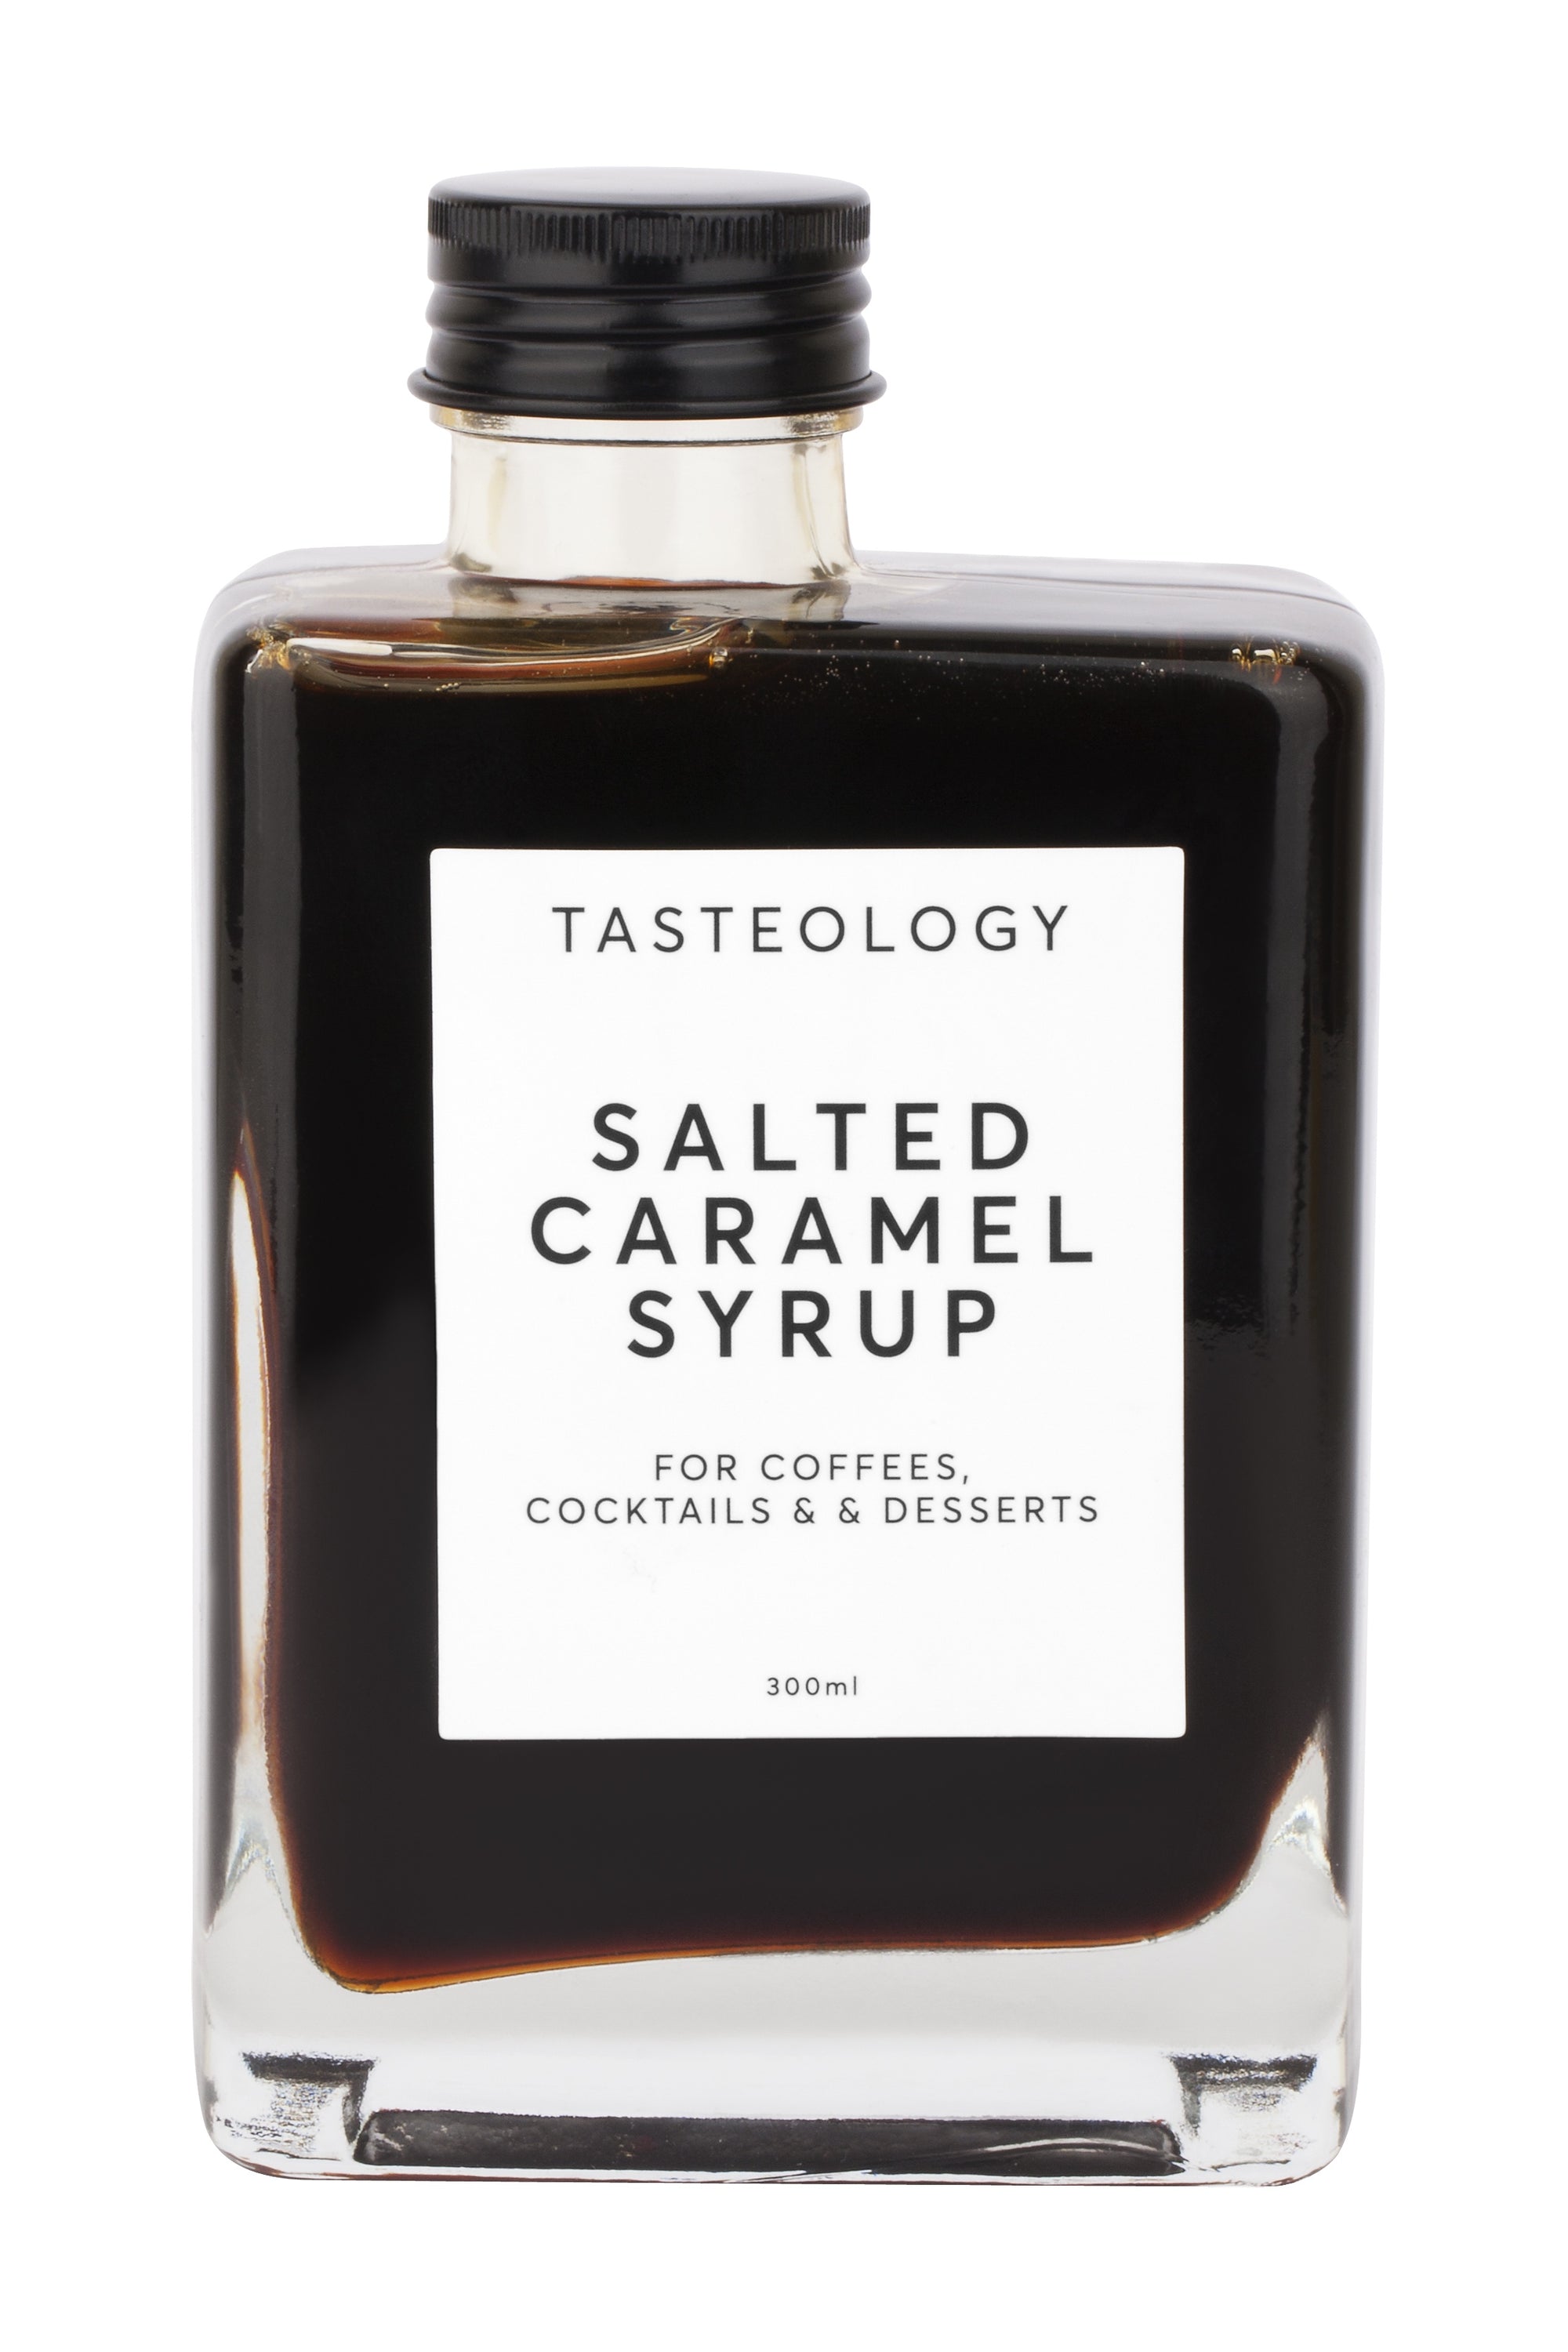 Tasteology Syrup 300ml - Salted Caramel